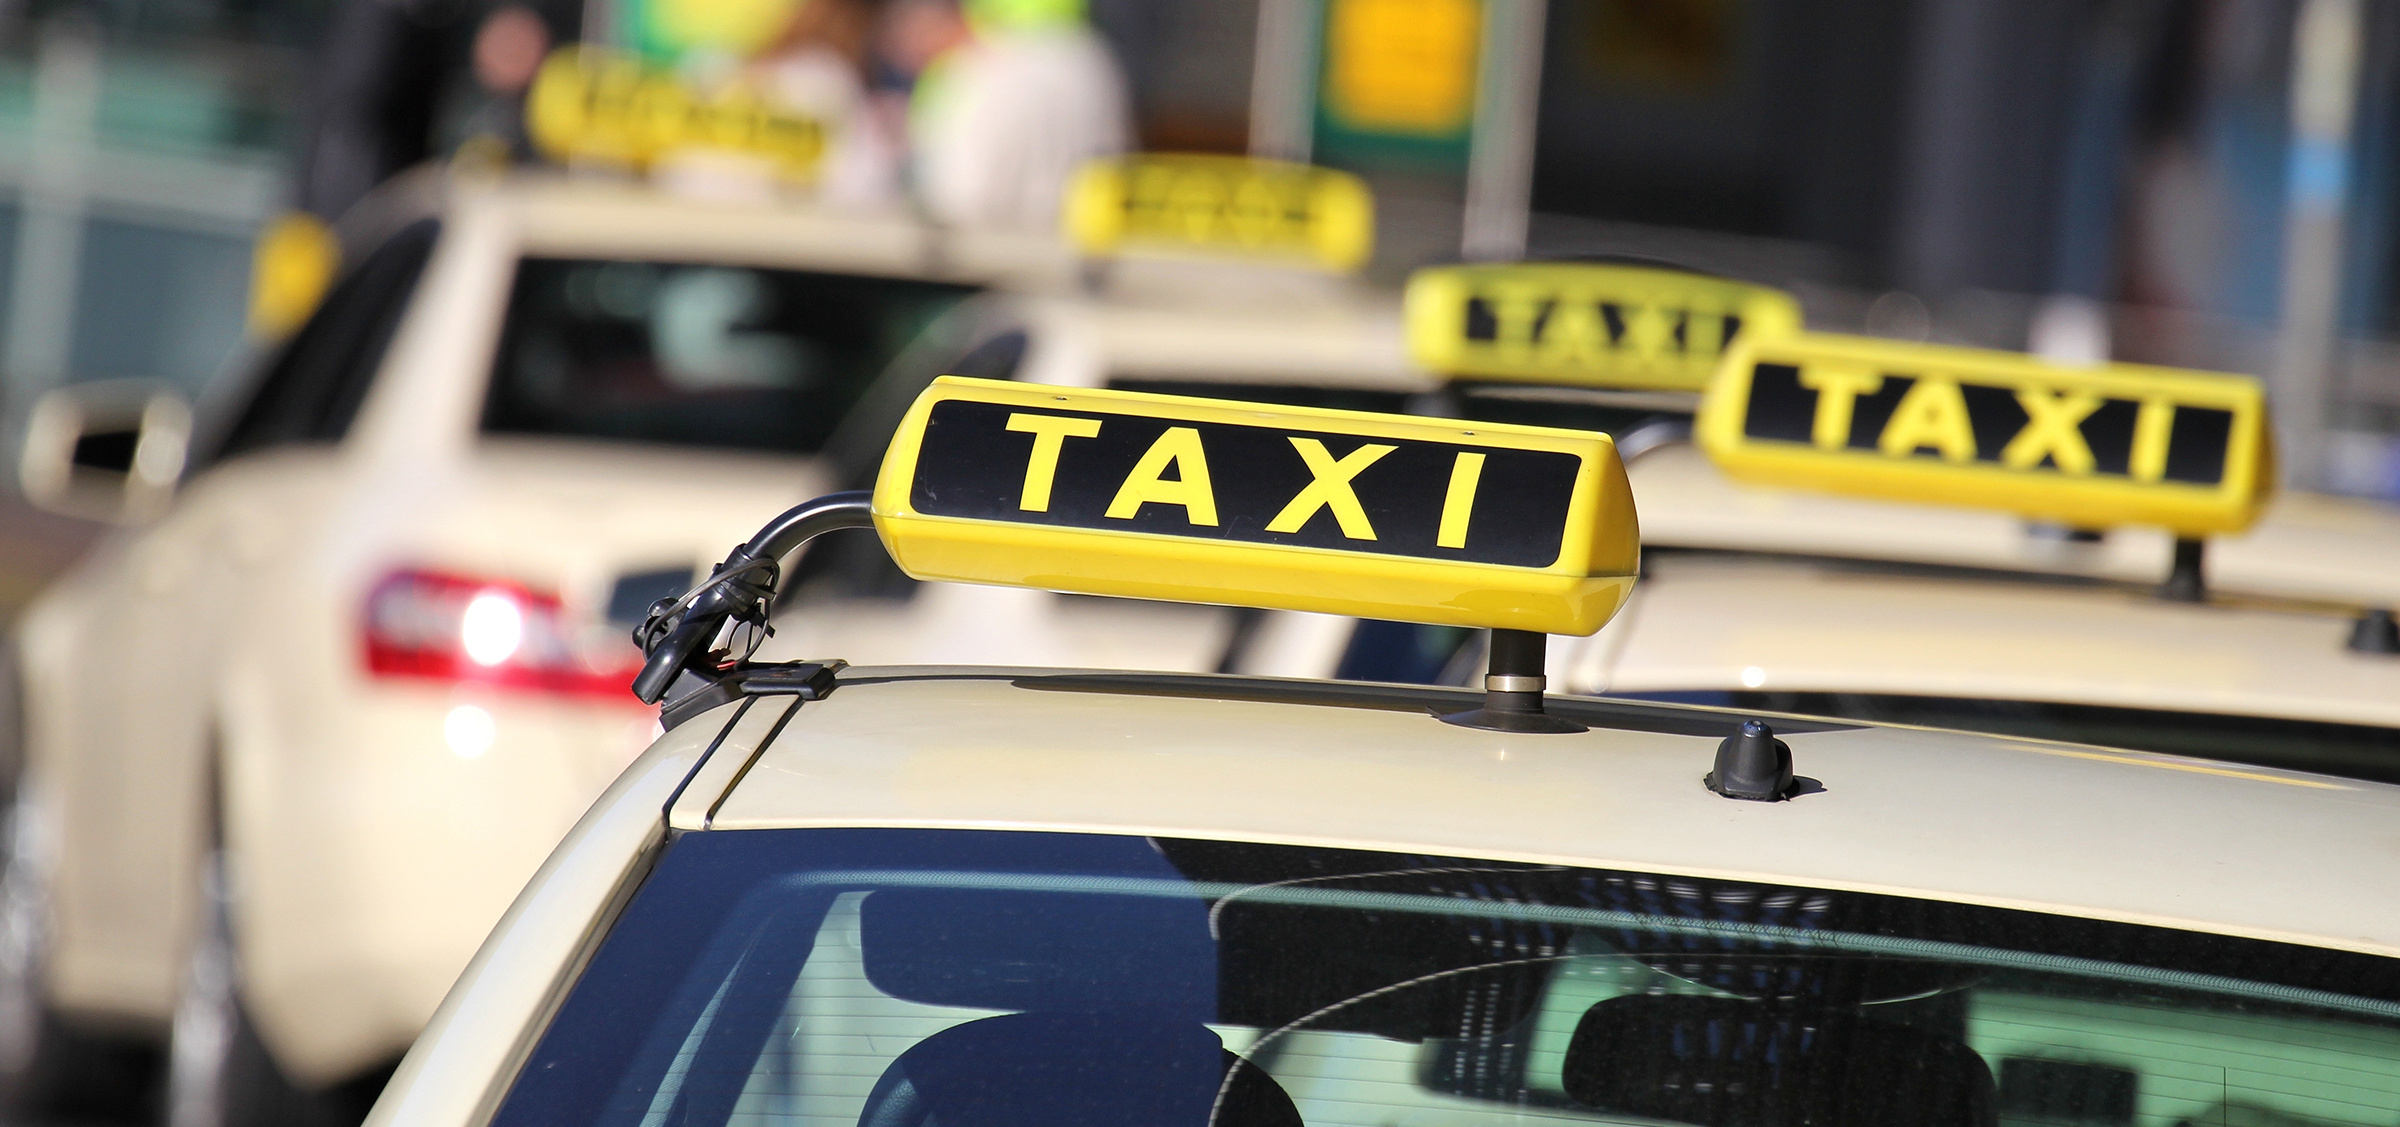 Taxi: A luminous taxicab top sign, A door-to-door automotive delivery service. 2400x1130 Dual Screen Wallpaper.